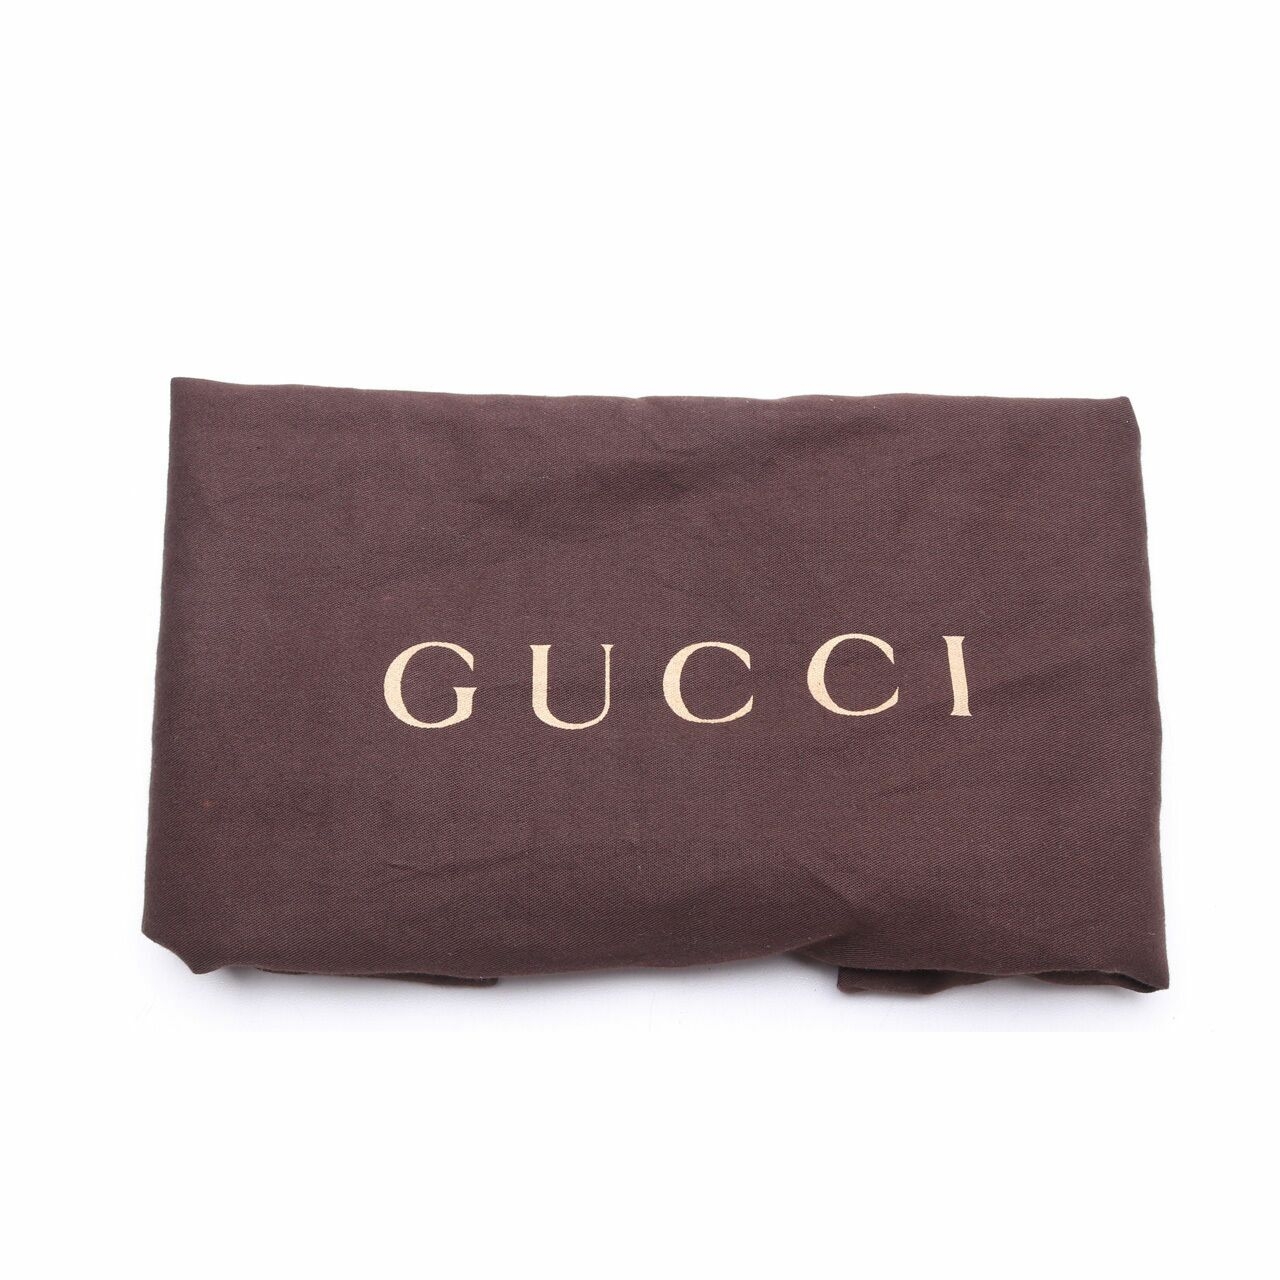 Gucci Kris Knight Flora Small 2way White Satchel Bag